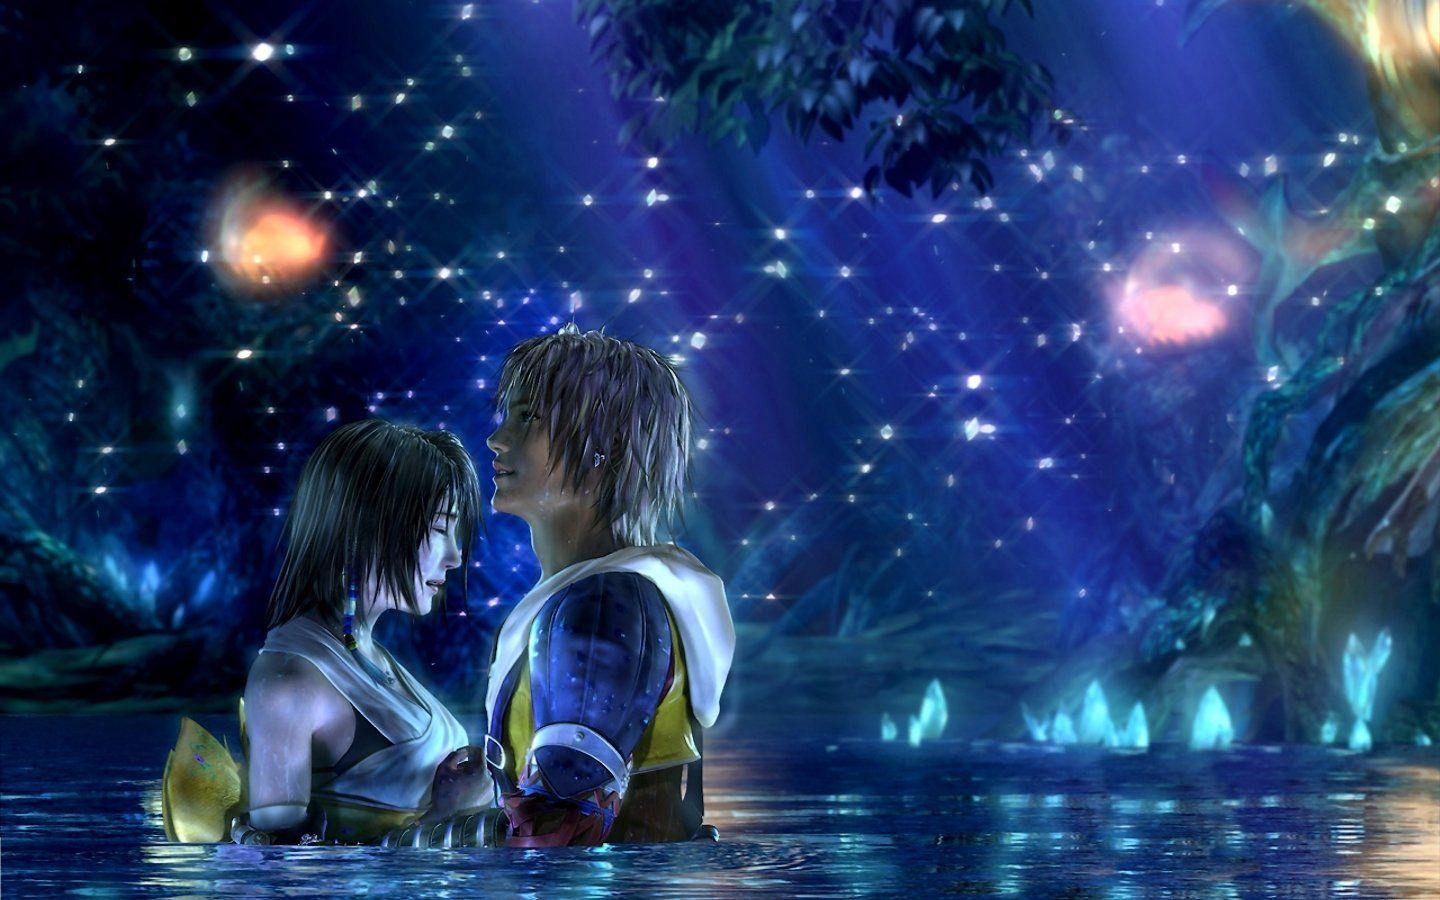 Final Fantasy X Backgrounds Wallpaper Cave